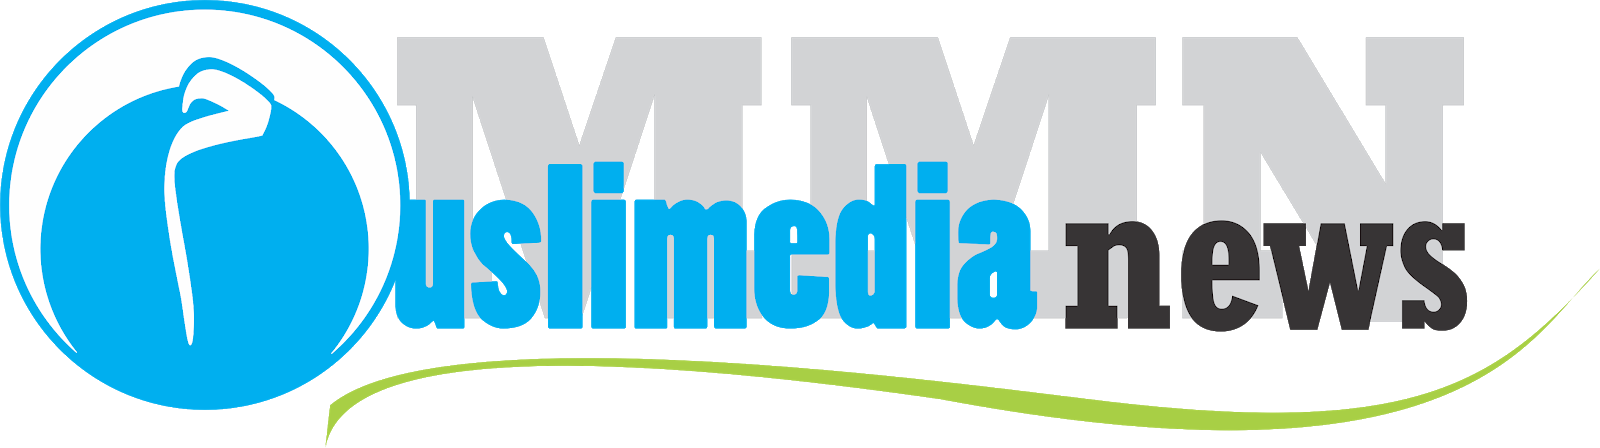 Muslimedia News - Media Islam | Voice of Muslim